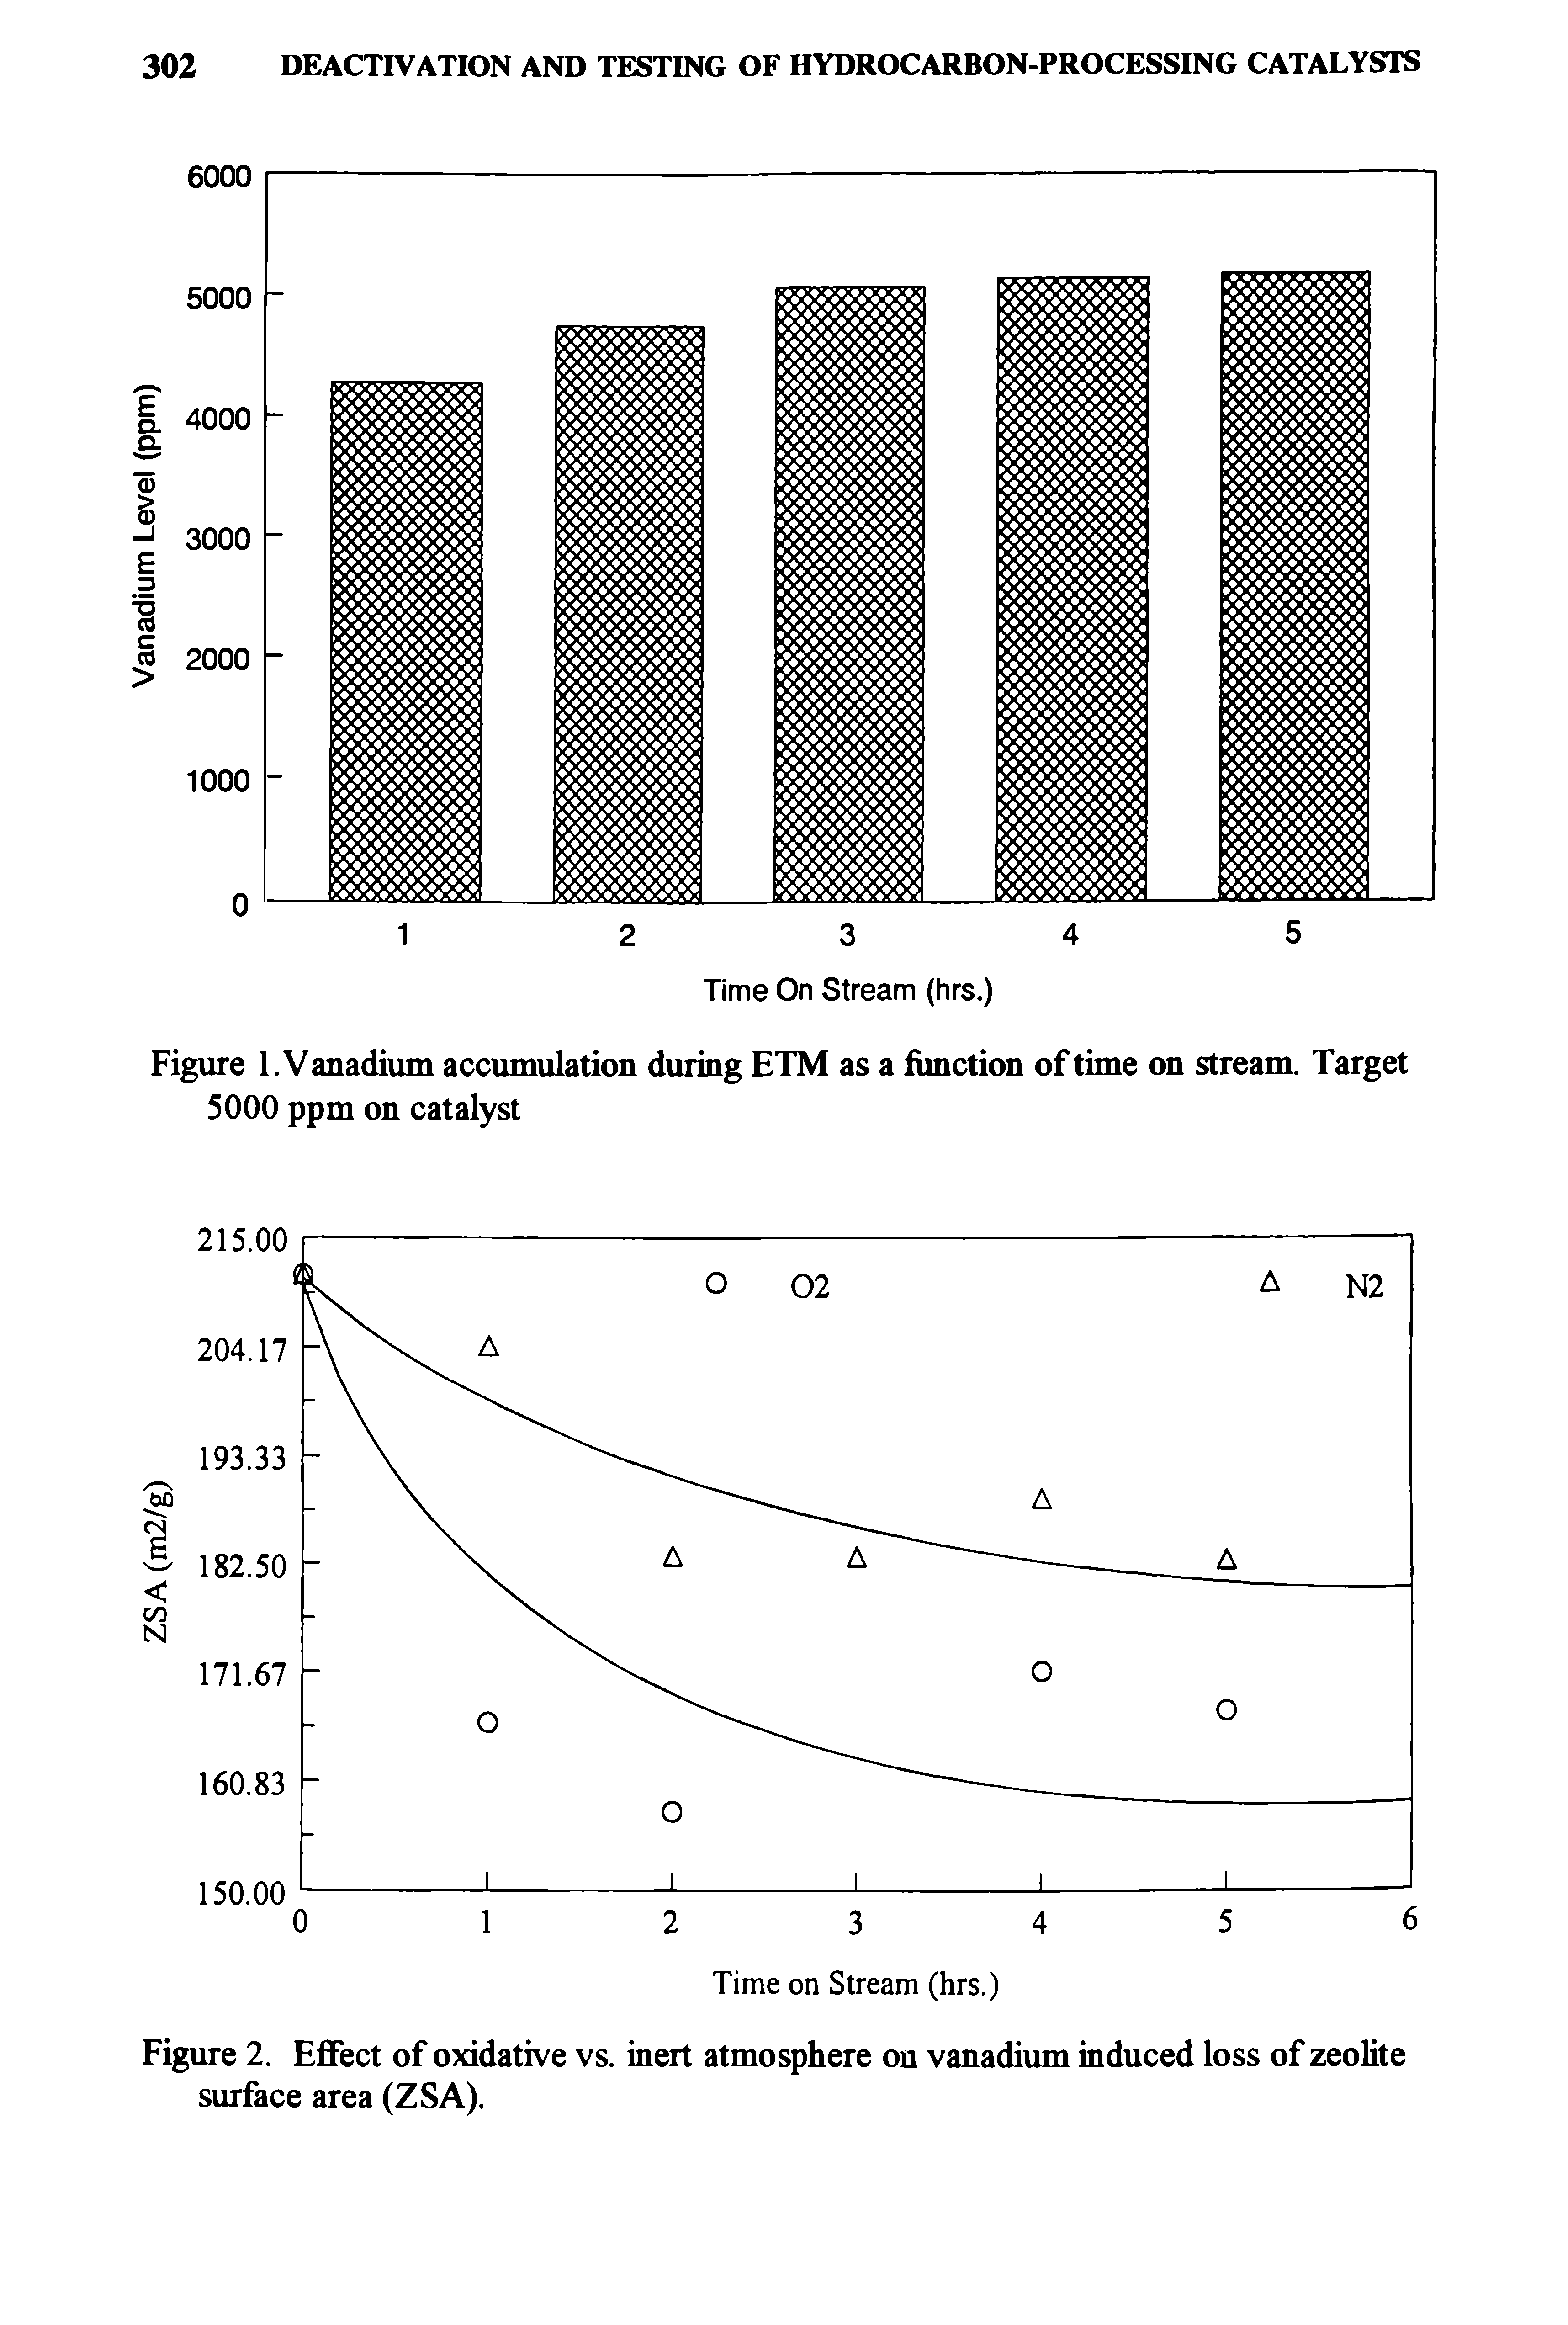 Figure 2. Effect of oxidative vs. inert atmosphere on vanadium induced loss of zeolite surface area (ZSA).